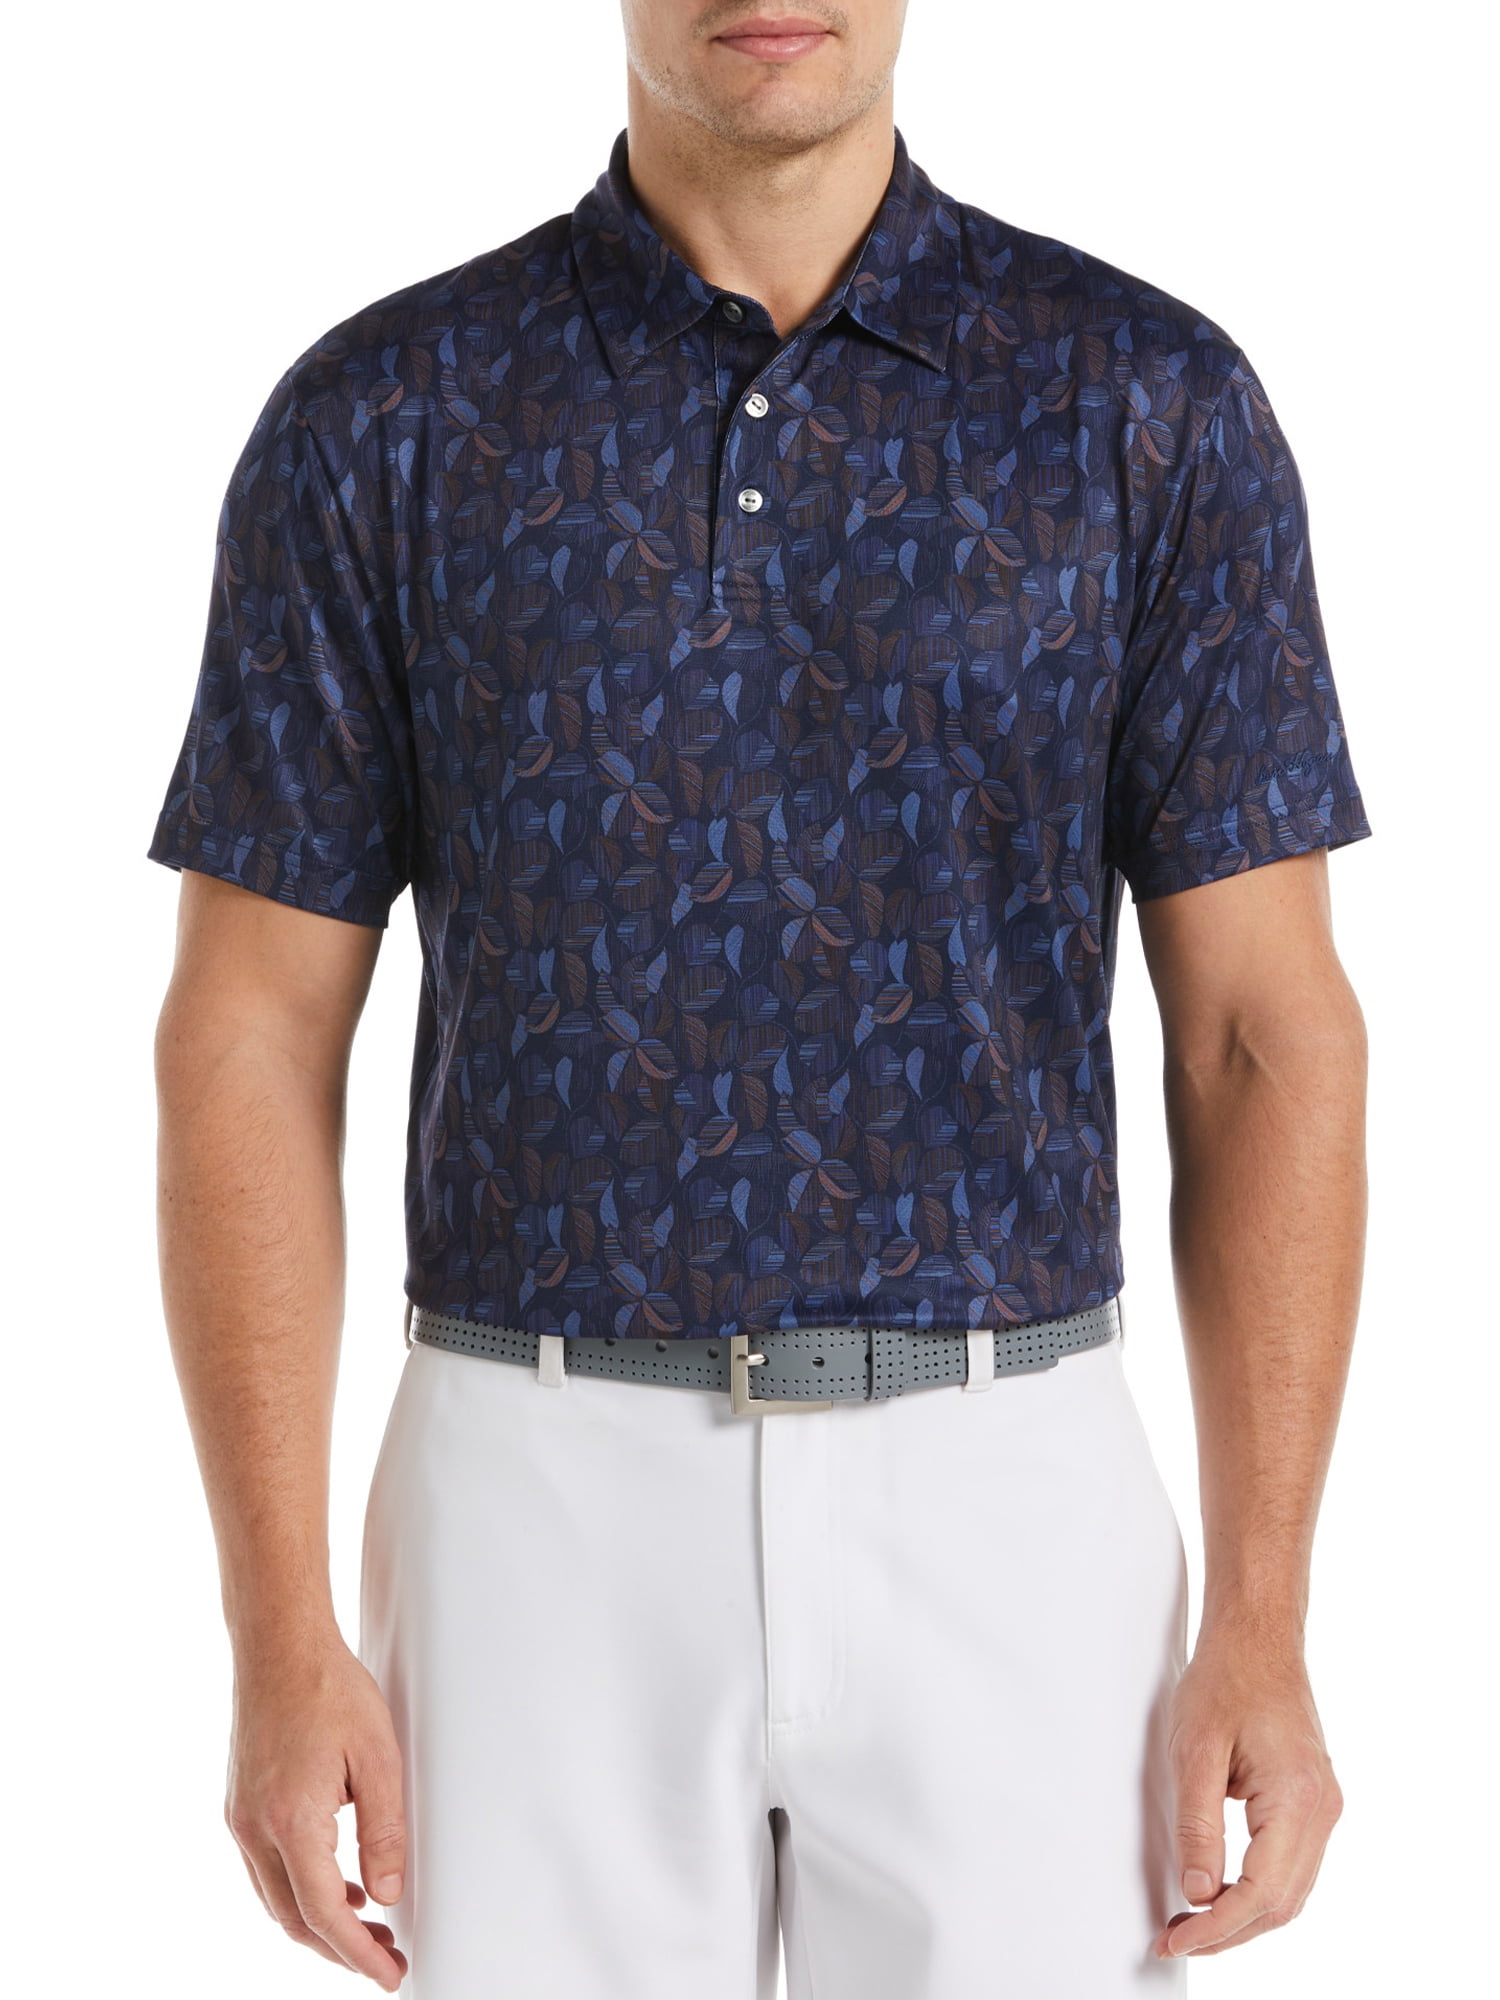 Ben Hogan Performance Men's Linear Botanical Print Golf Polo Shirt